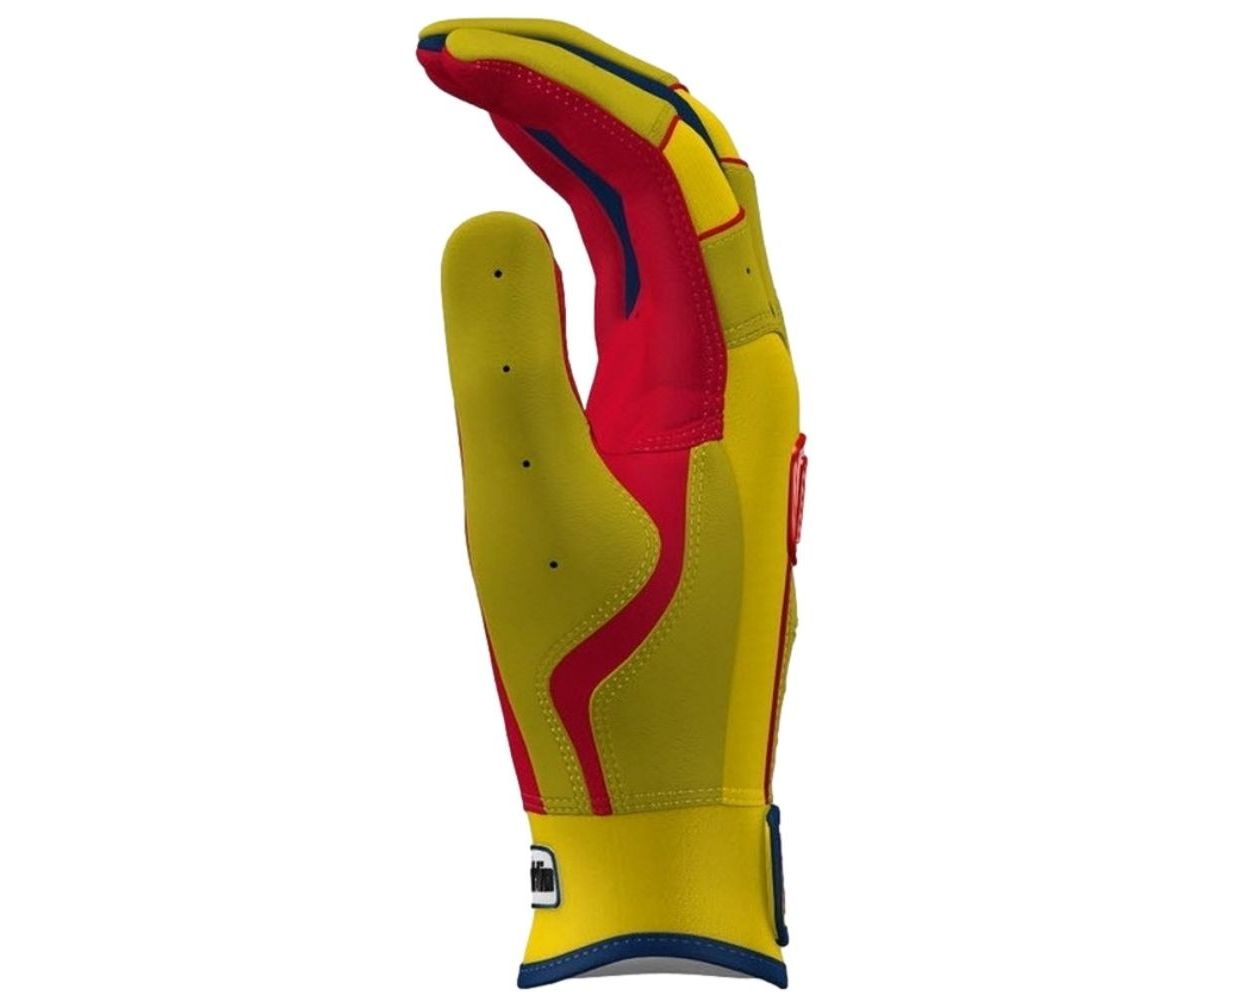 Franklin Custom CFX Pro Batting Gloves